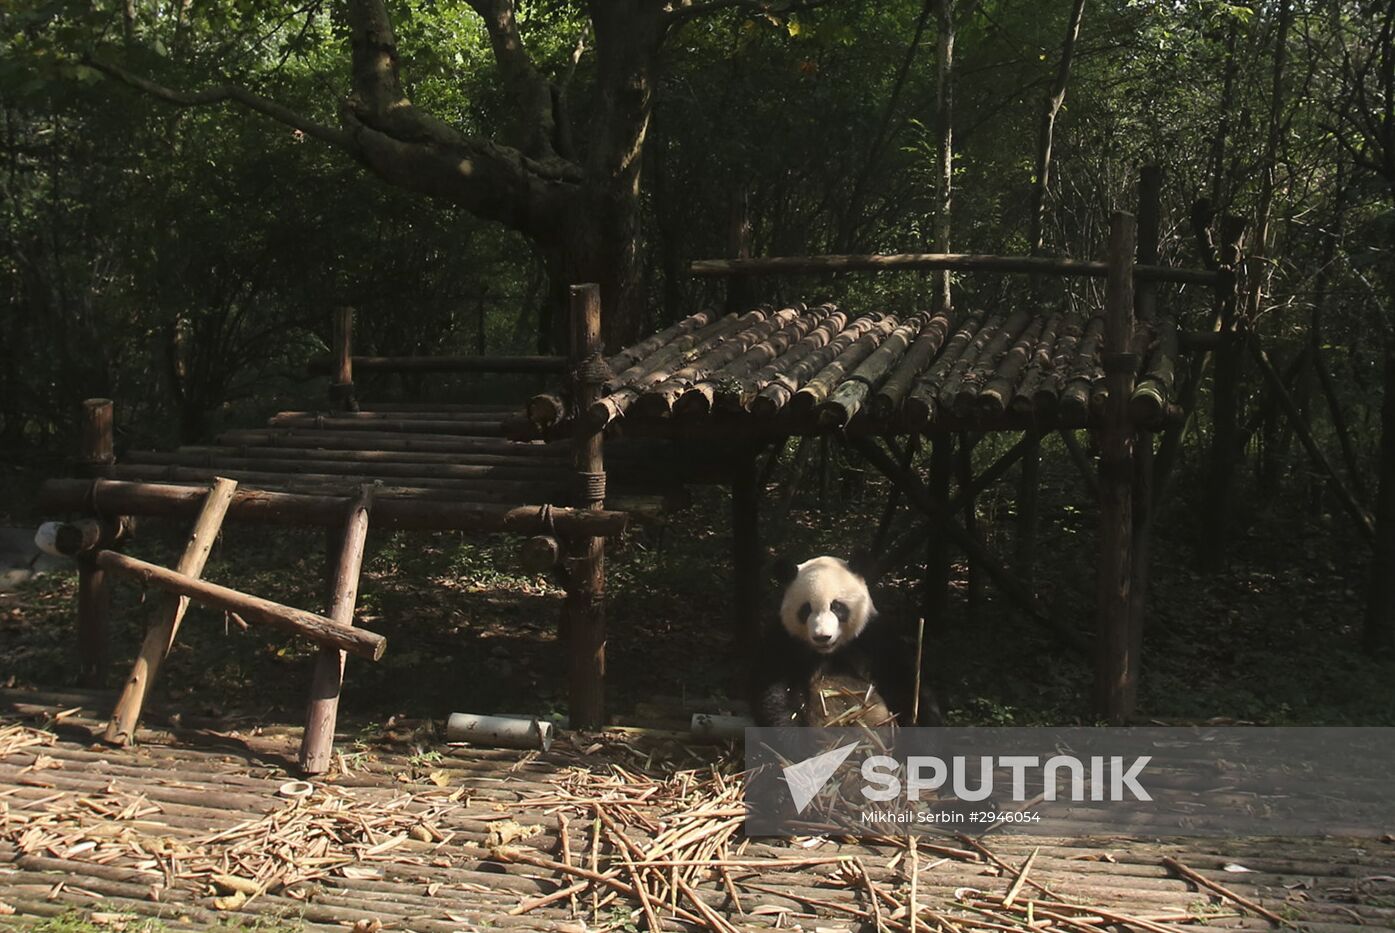 Chengdu Research Base of Giant Panda Breeding in China